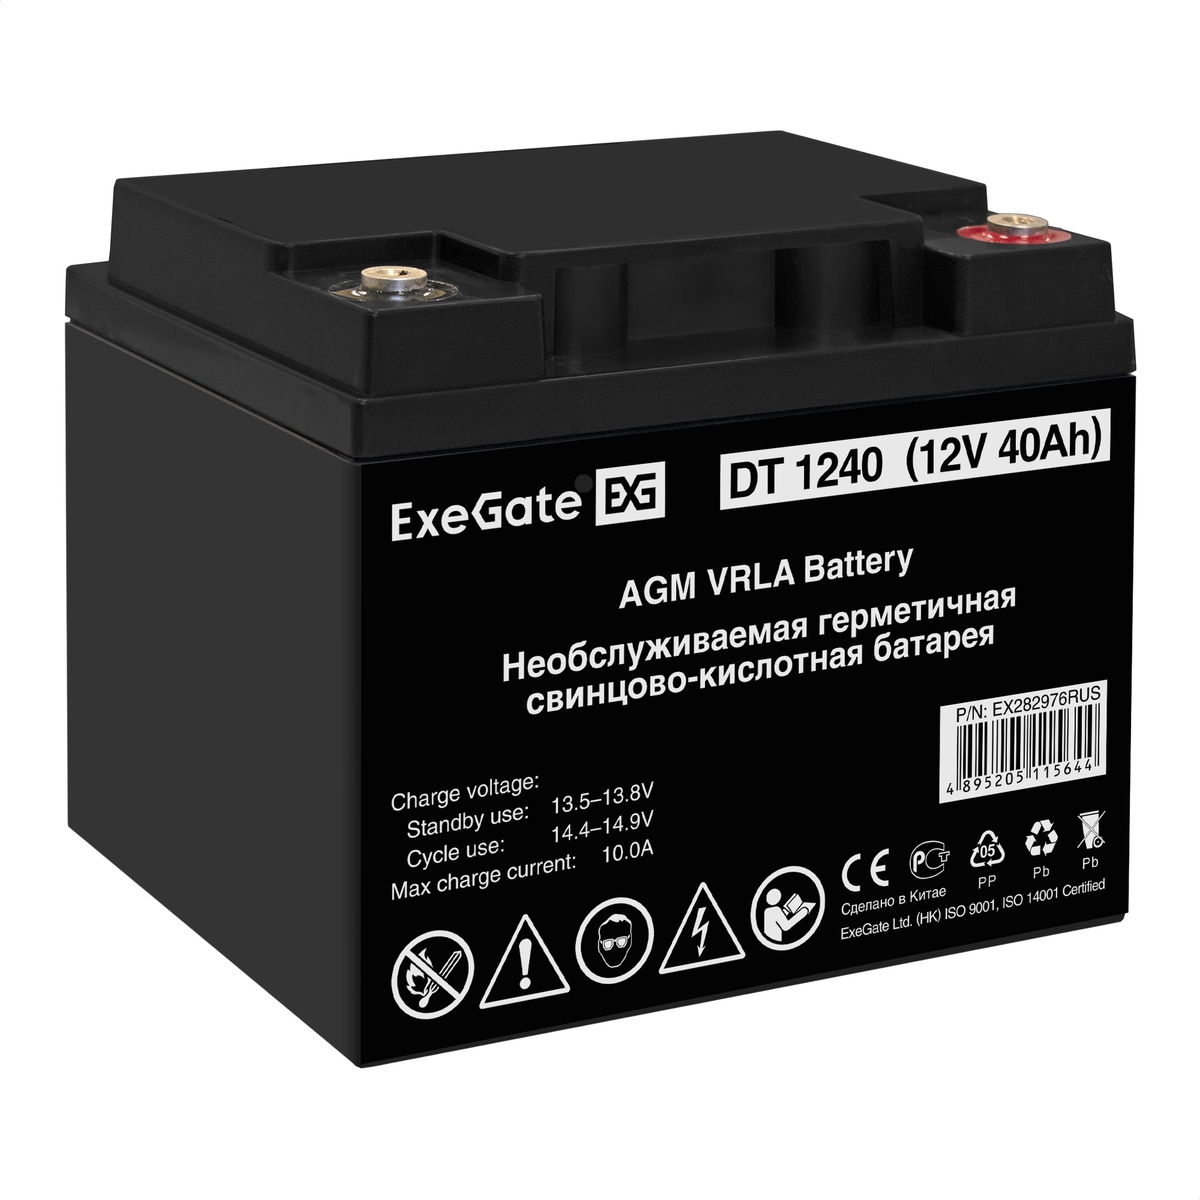 UPS set EX296001 + battery 40Ah EX282976 2 piece